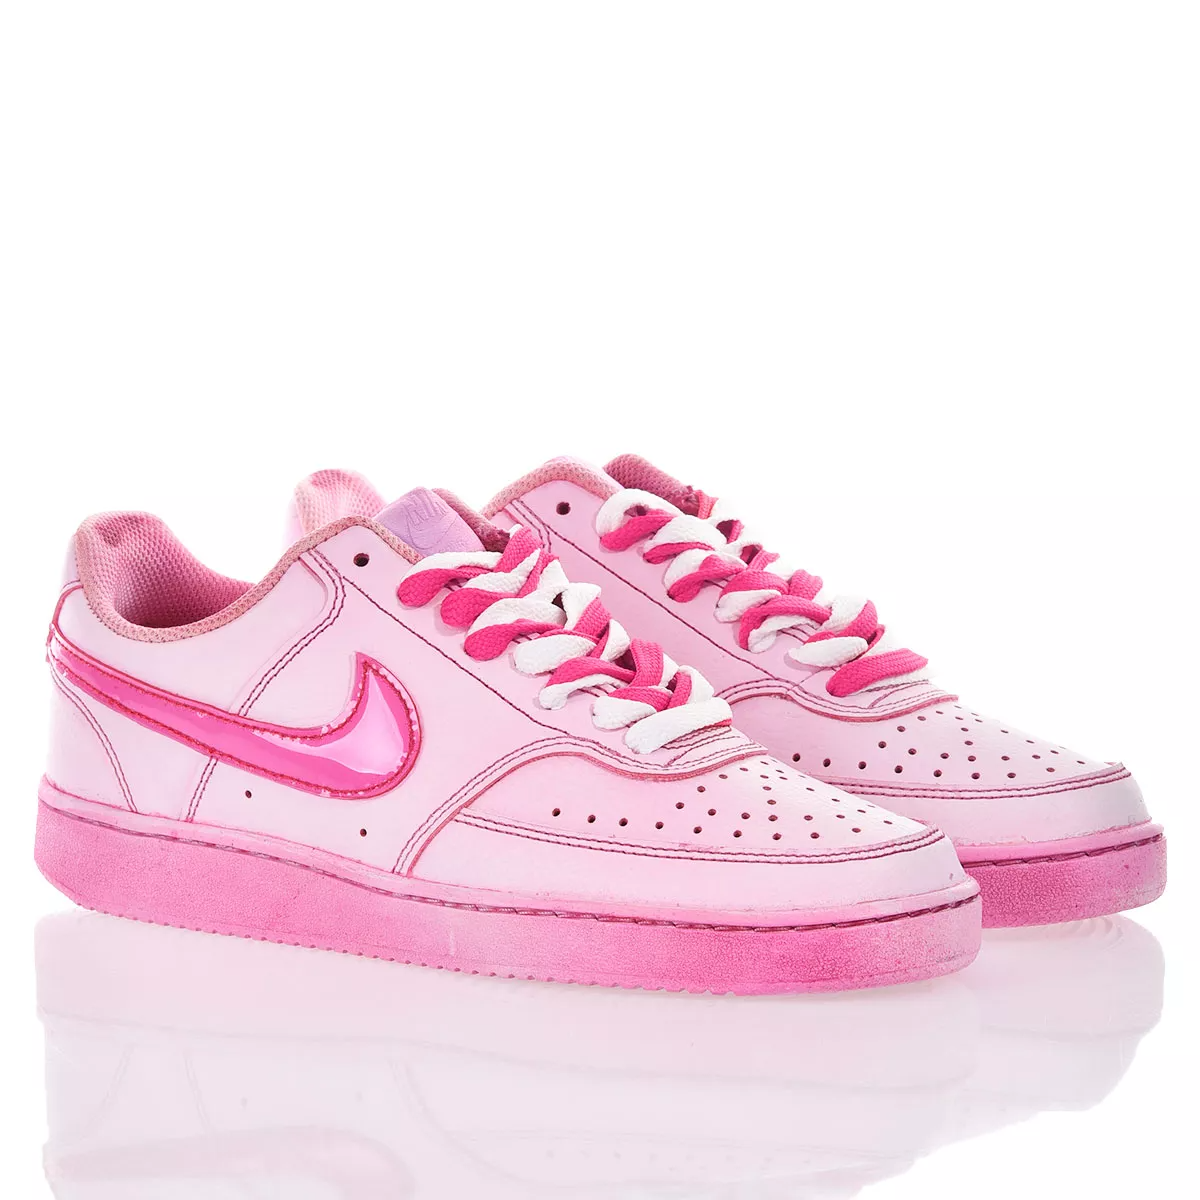 Nike Pink Plastic